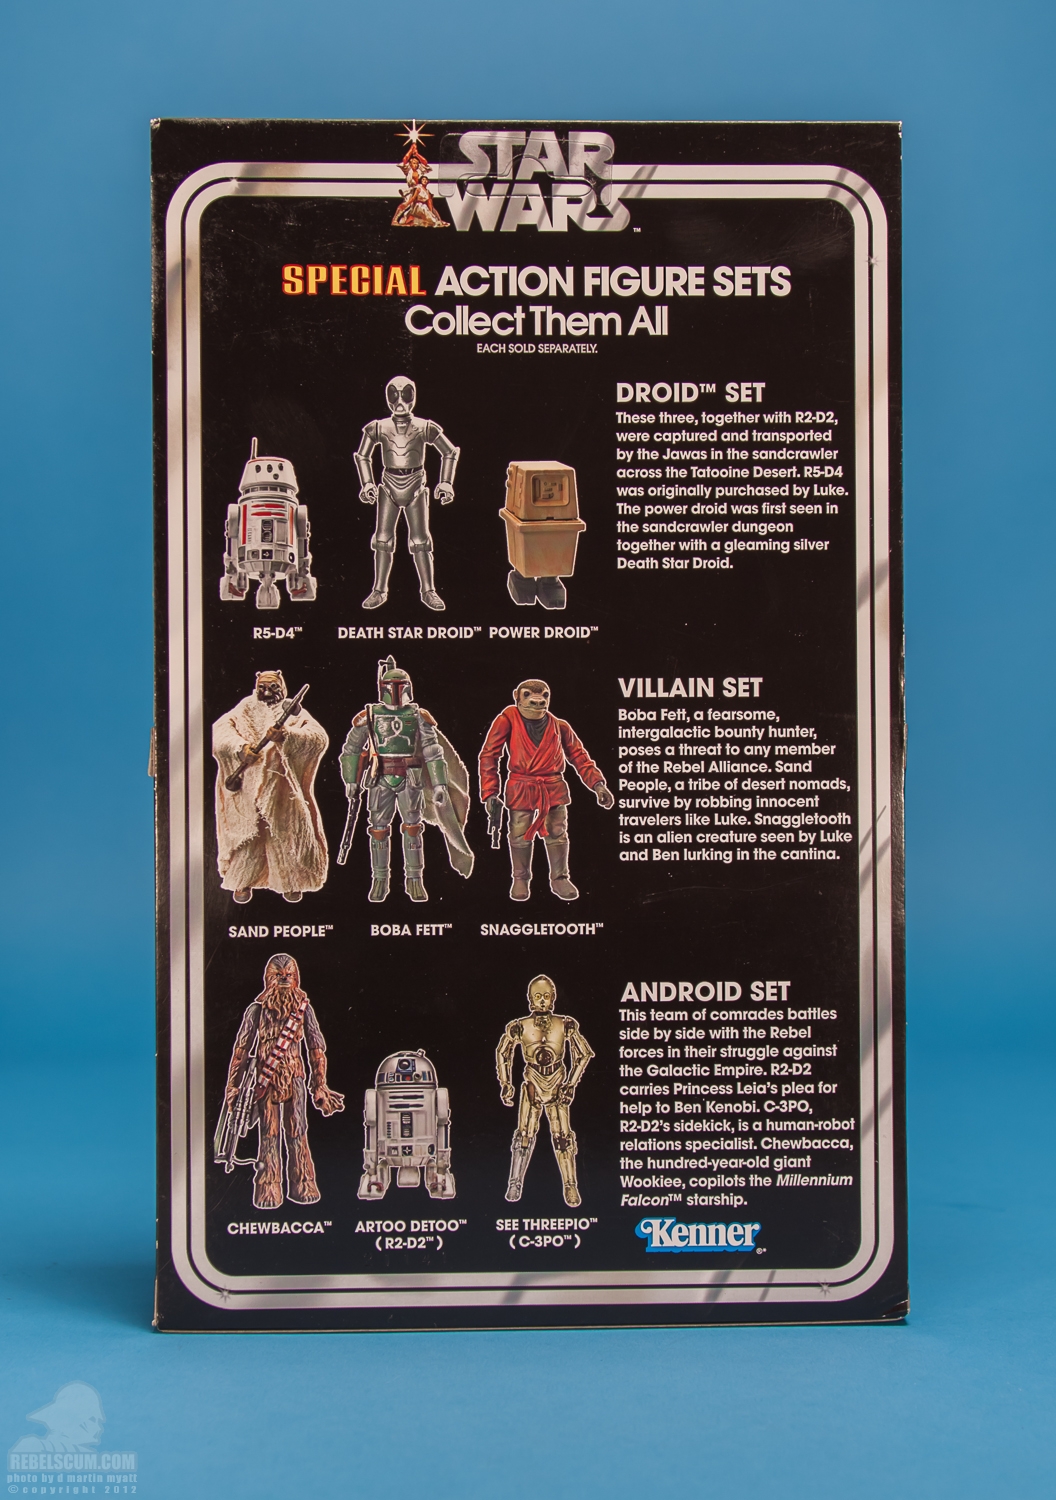 Power_Droid_Set_Special_Action_Figure_Set_Star_Wars_Hasbro-31.jpg